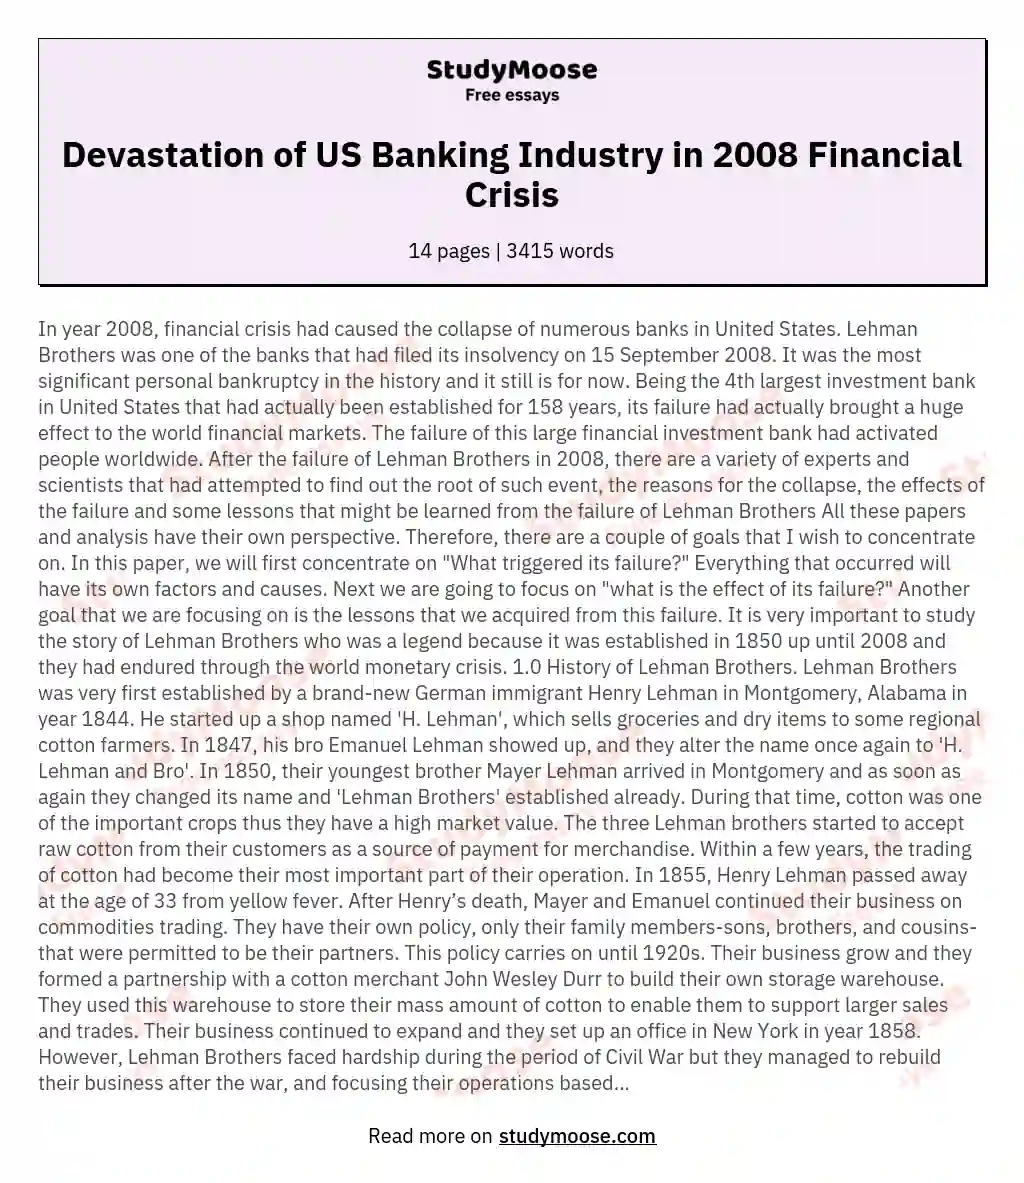 Devastation of US Banking Industry in 2008 Financial Crisis essay